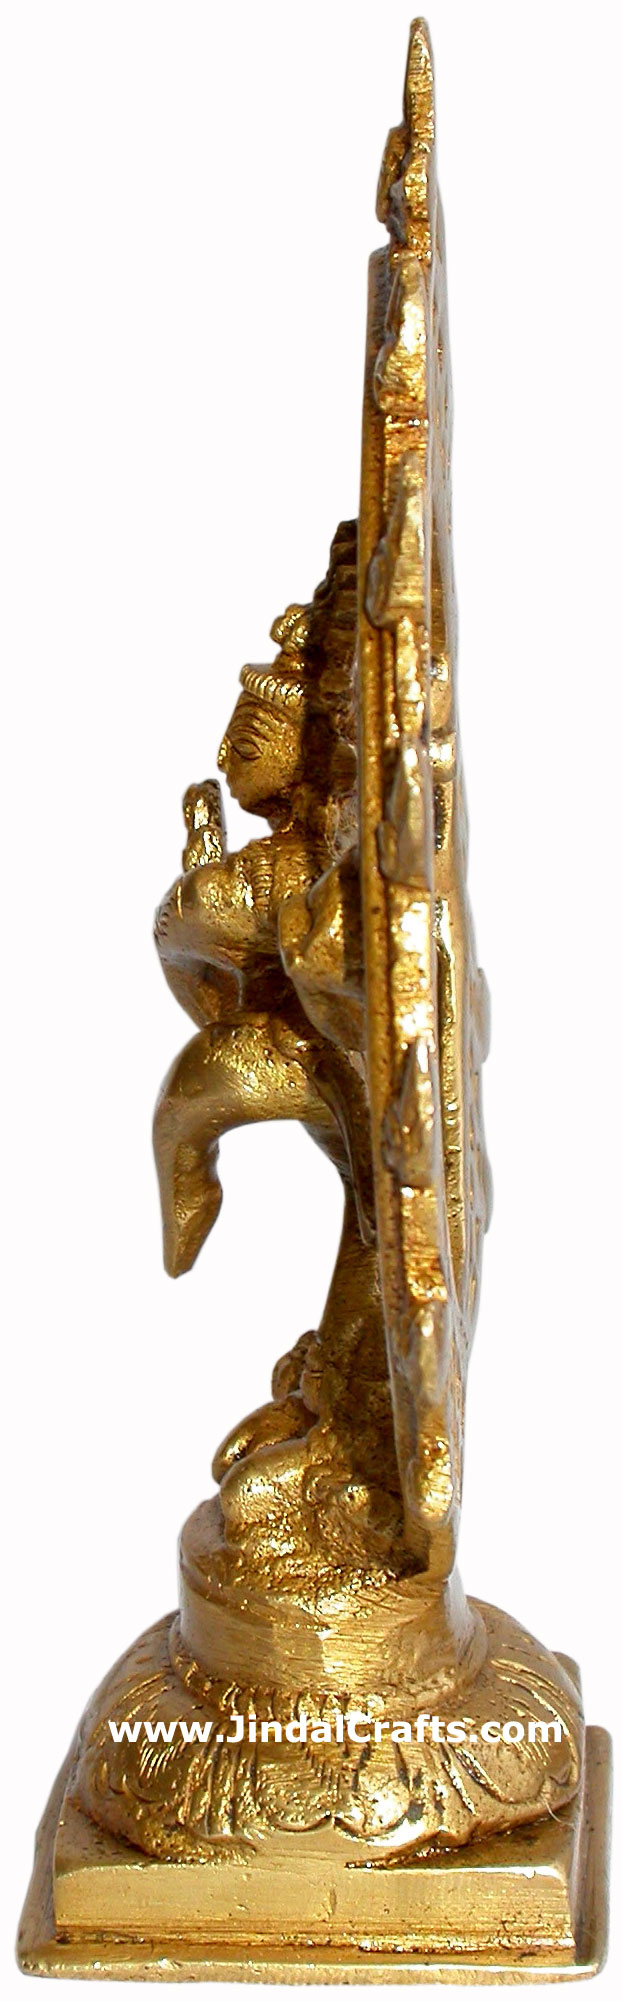 Natraja - Hand Carved Indian Art Craft Handicraft Home Decor Brass Figurine